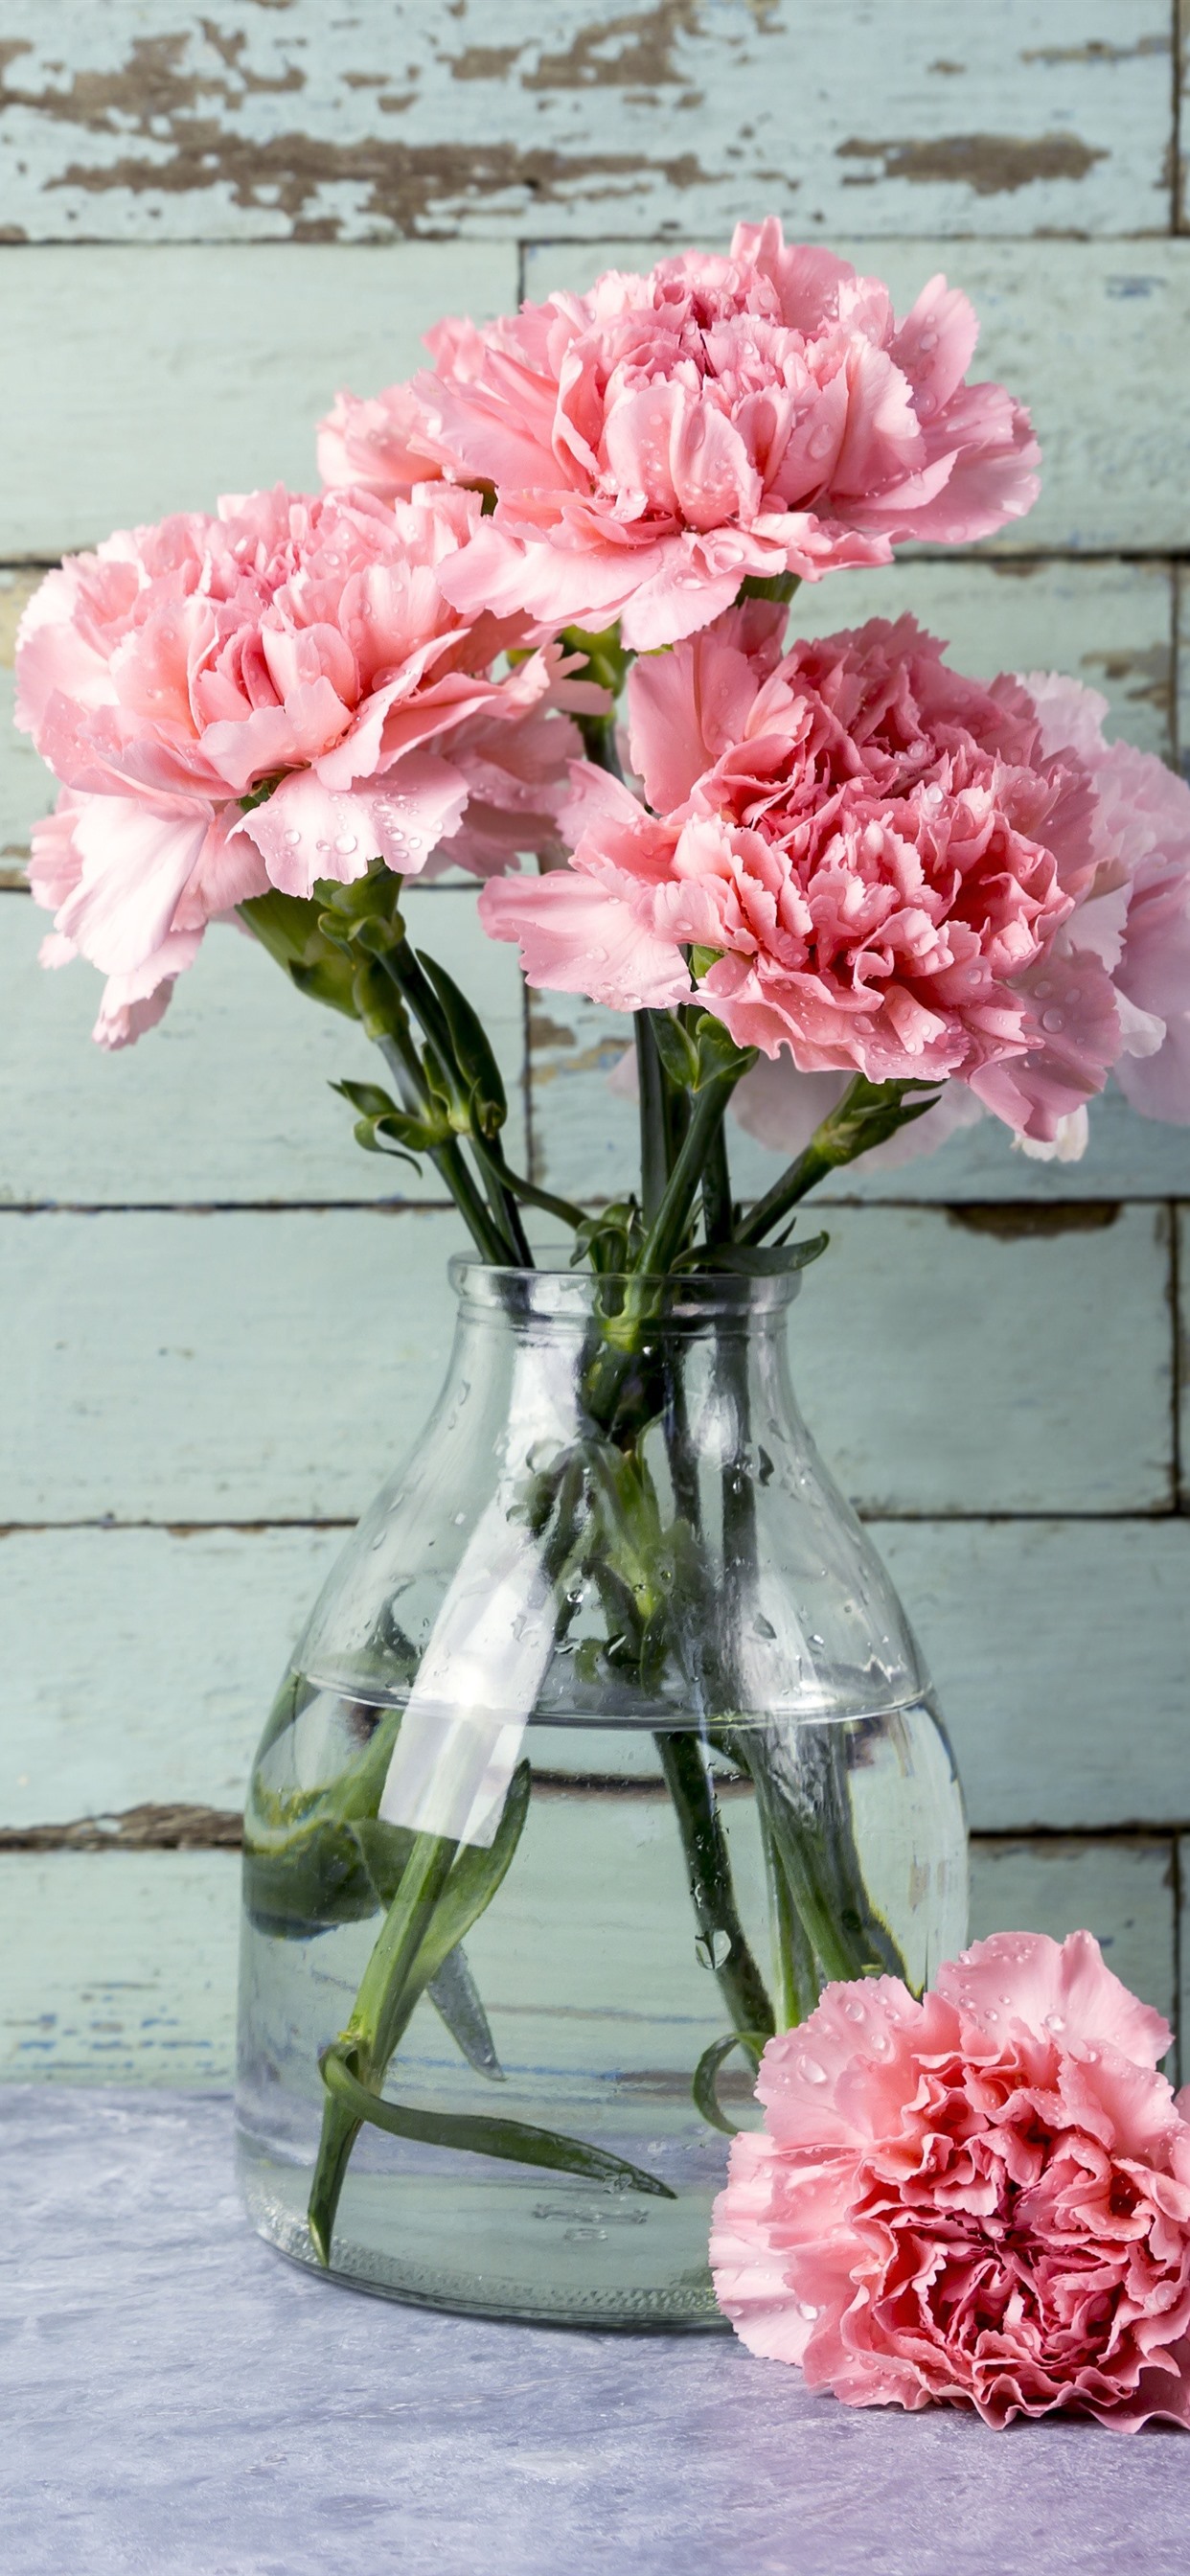 iPhone Wallpaper Pink Carnation Flowers Vase Flower